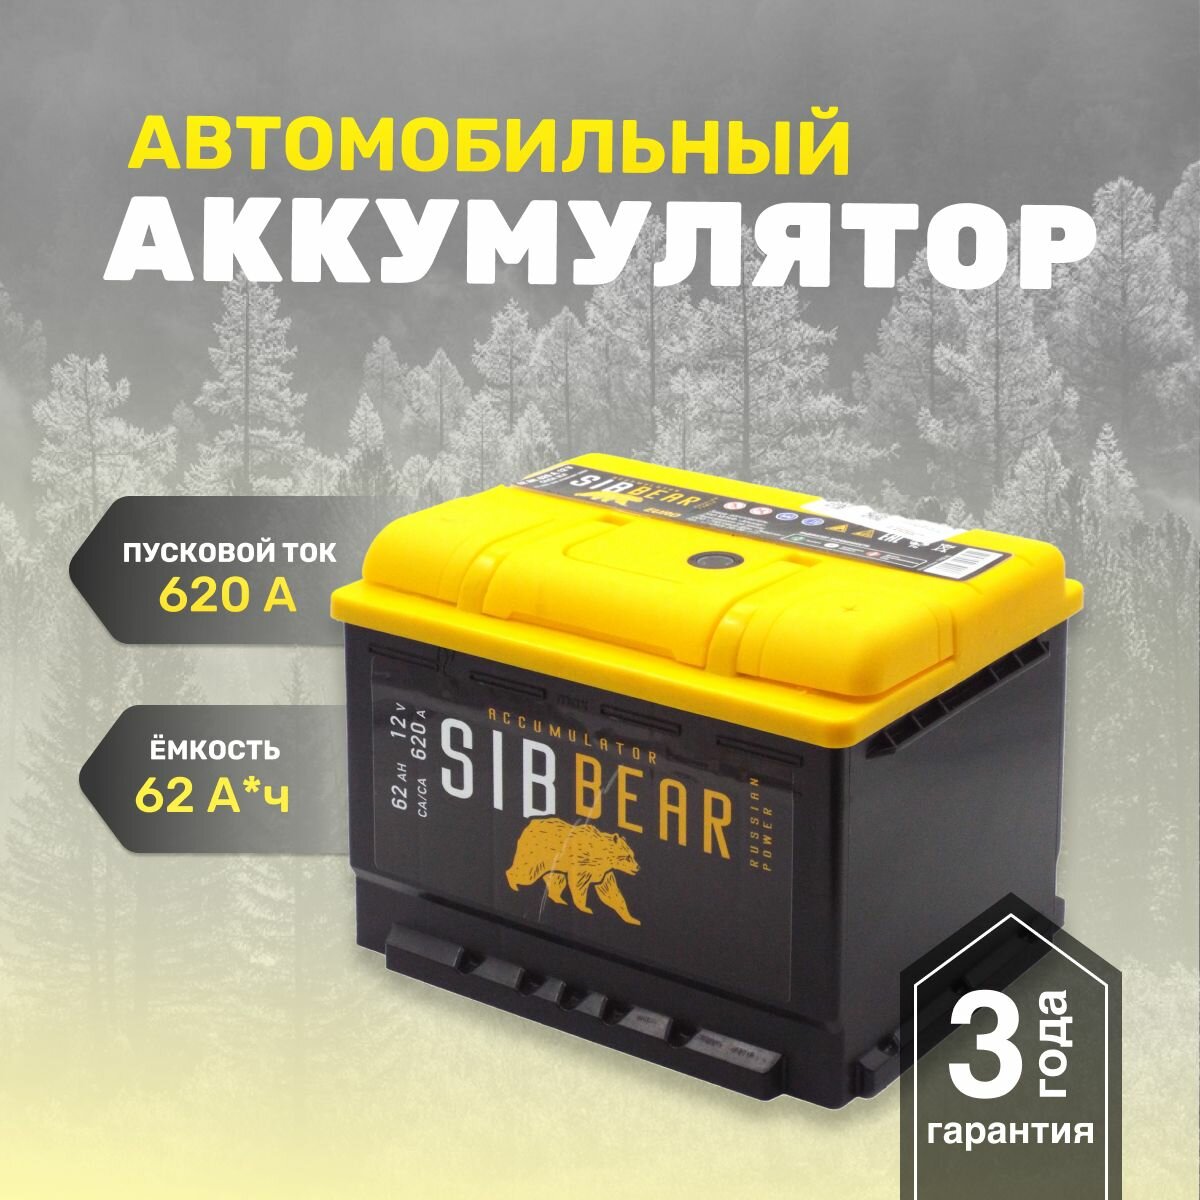 Аккумулятор для автомобилей АКБ для машины SIBBEAR LB 62 А*ч о.п. 242х175х175 Обратная полярность